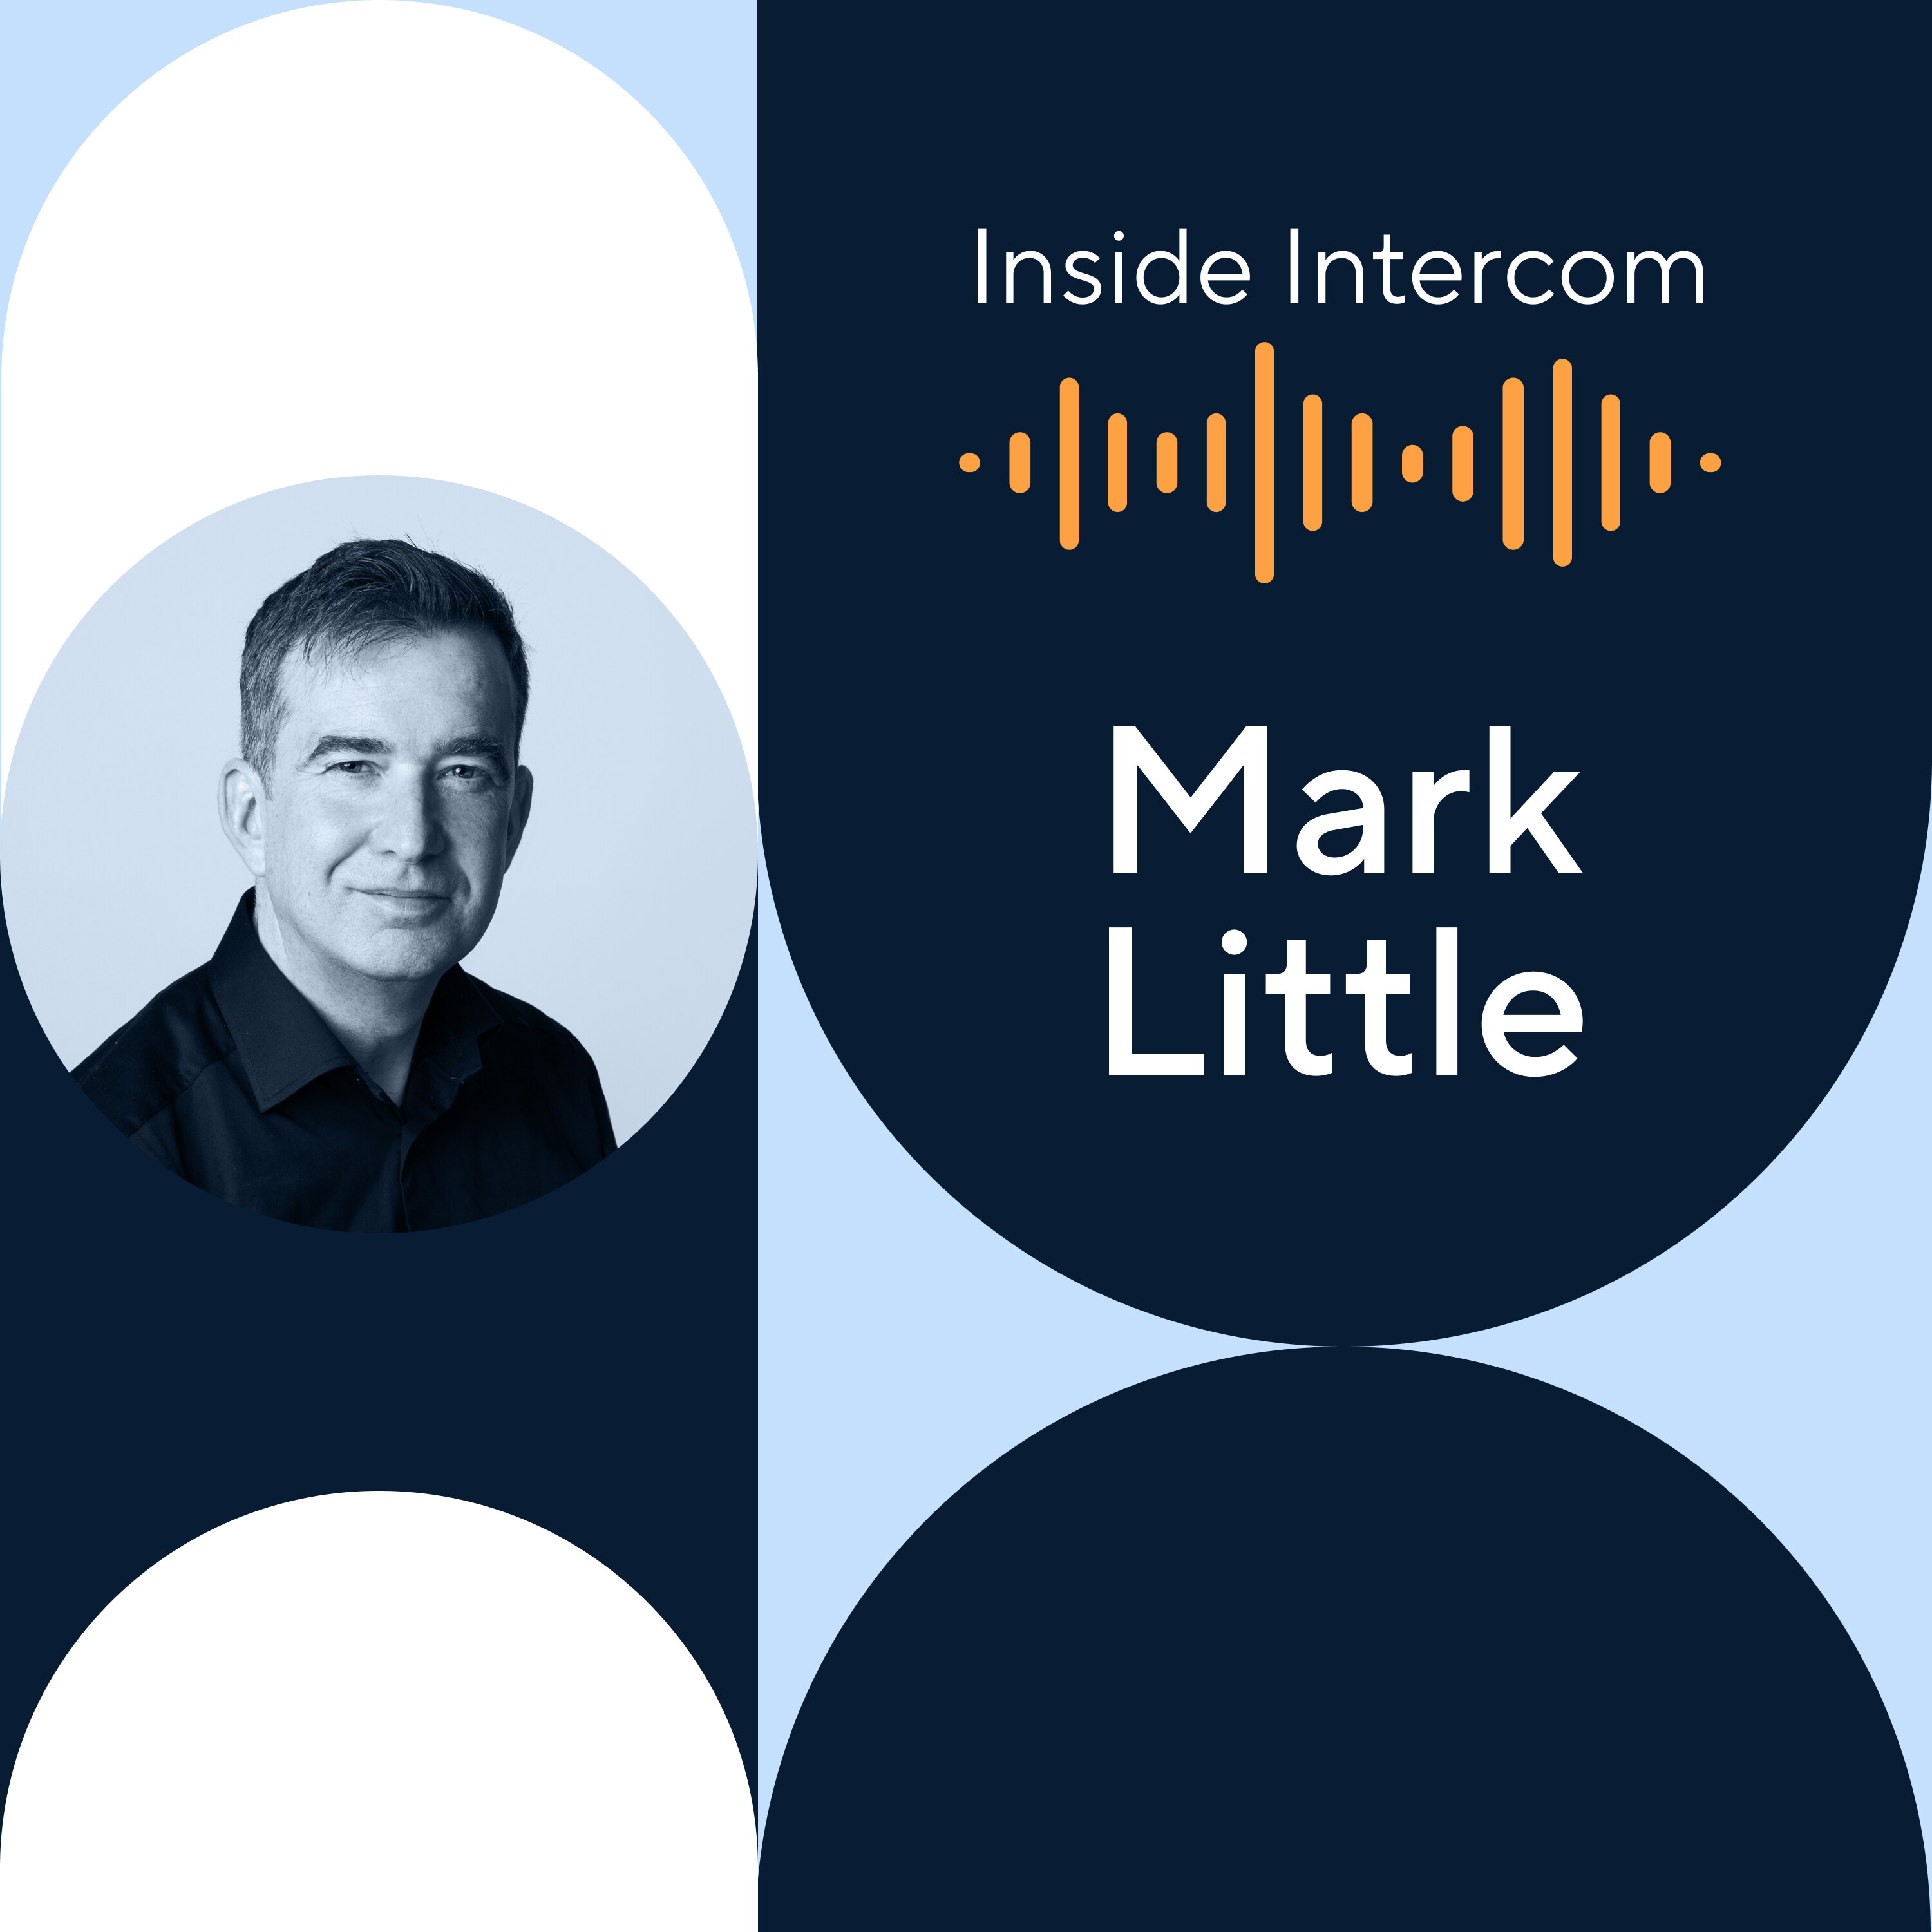 Kinzen’s CEO Mark Little on the fight against disinformation